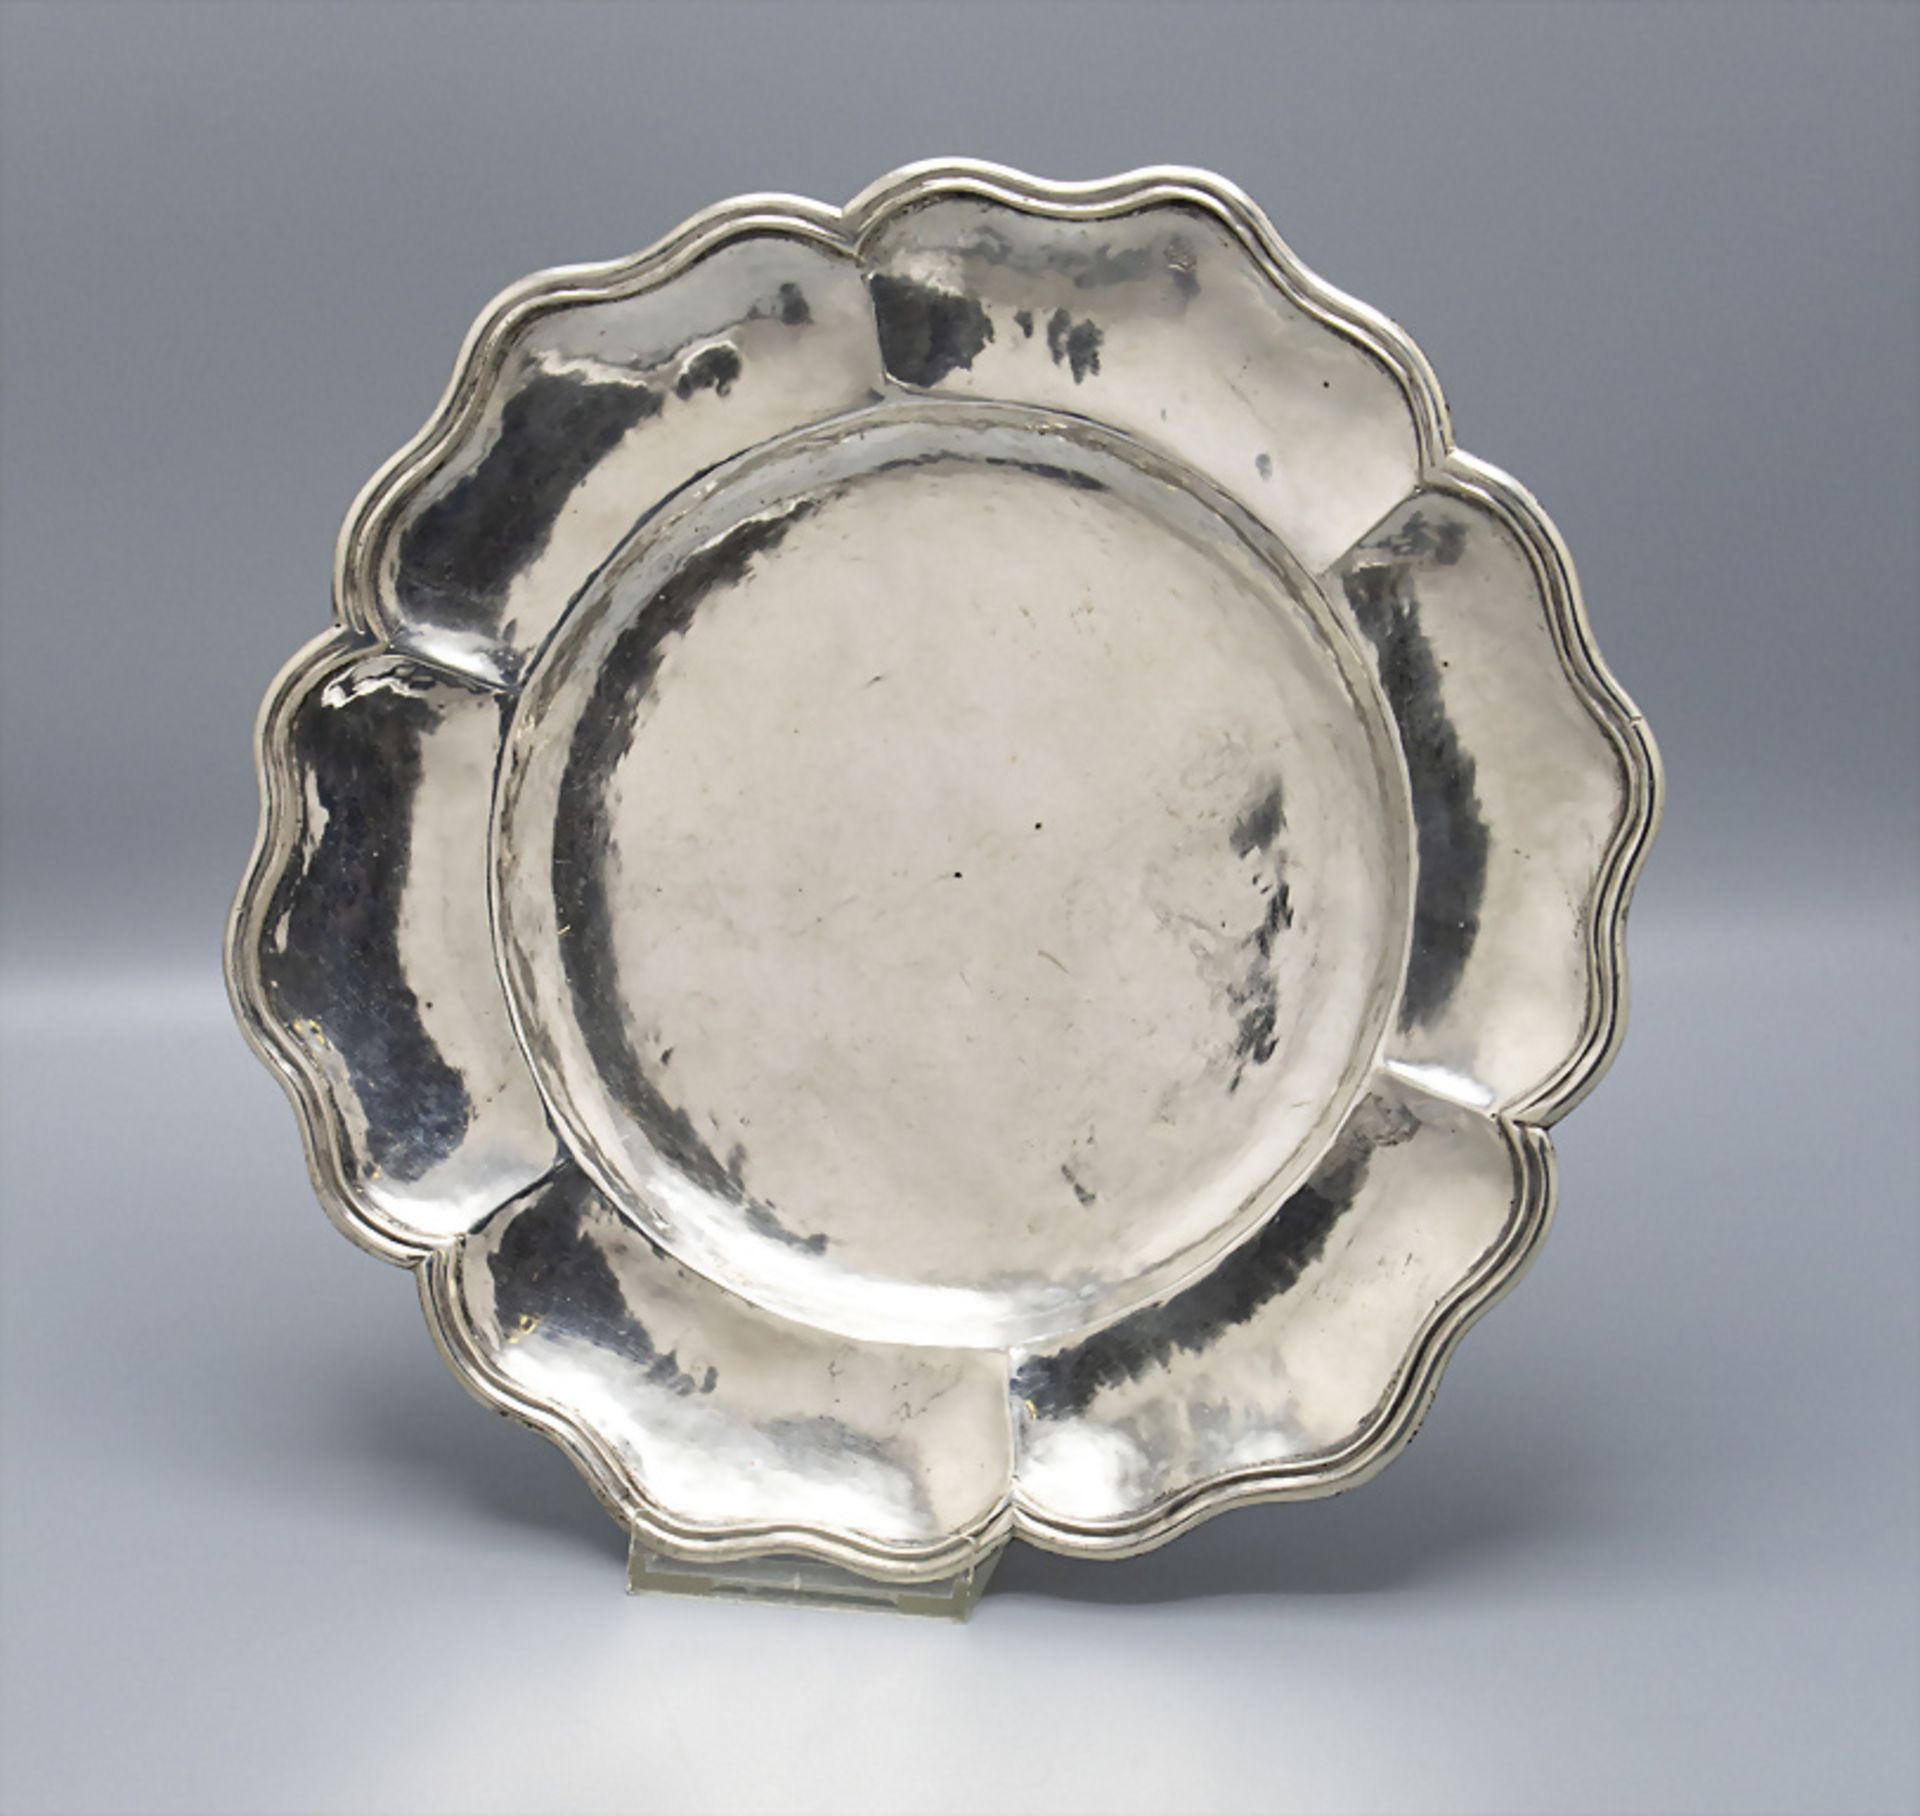 Barock Teller / A Baroque silver plate, wohl Südamerika, 18. Jh.